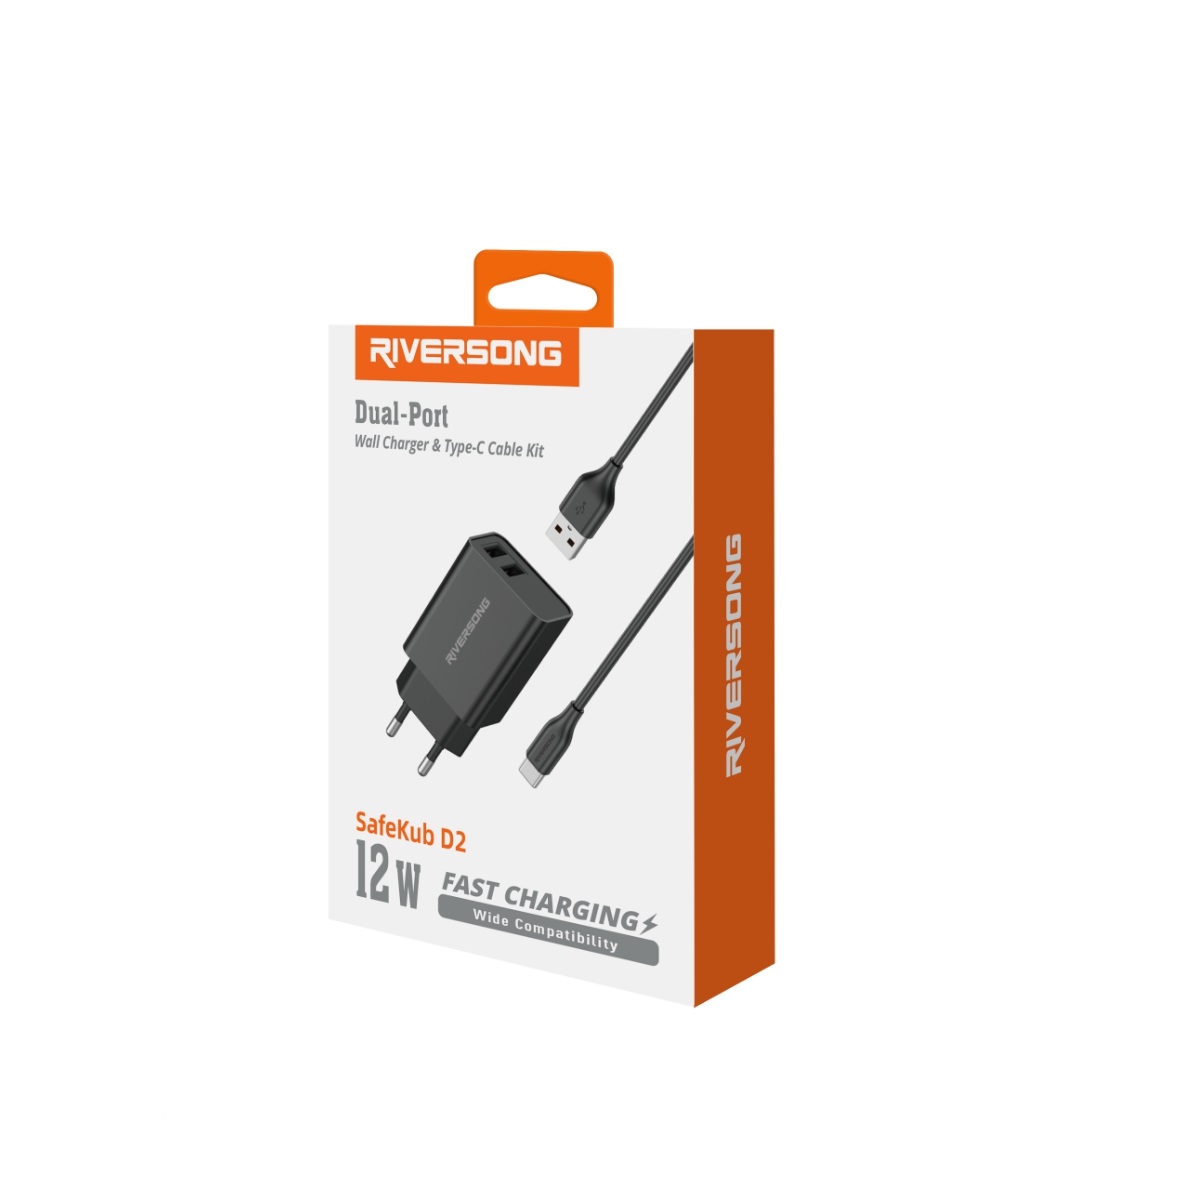 Riversong adowarka sieciowa SafeKub D2 2x USB 12W czarna + kabel USB - USB-C AD29 + CT85 / 2